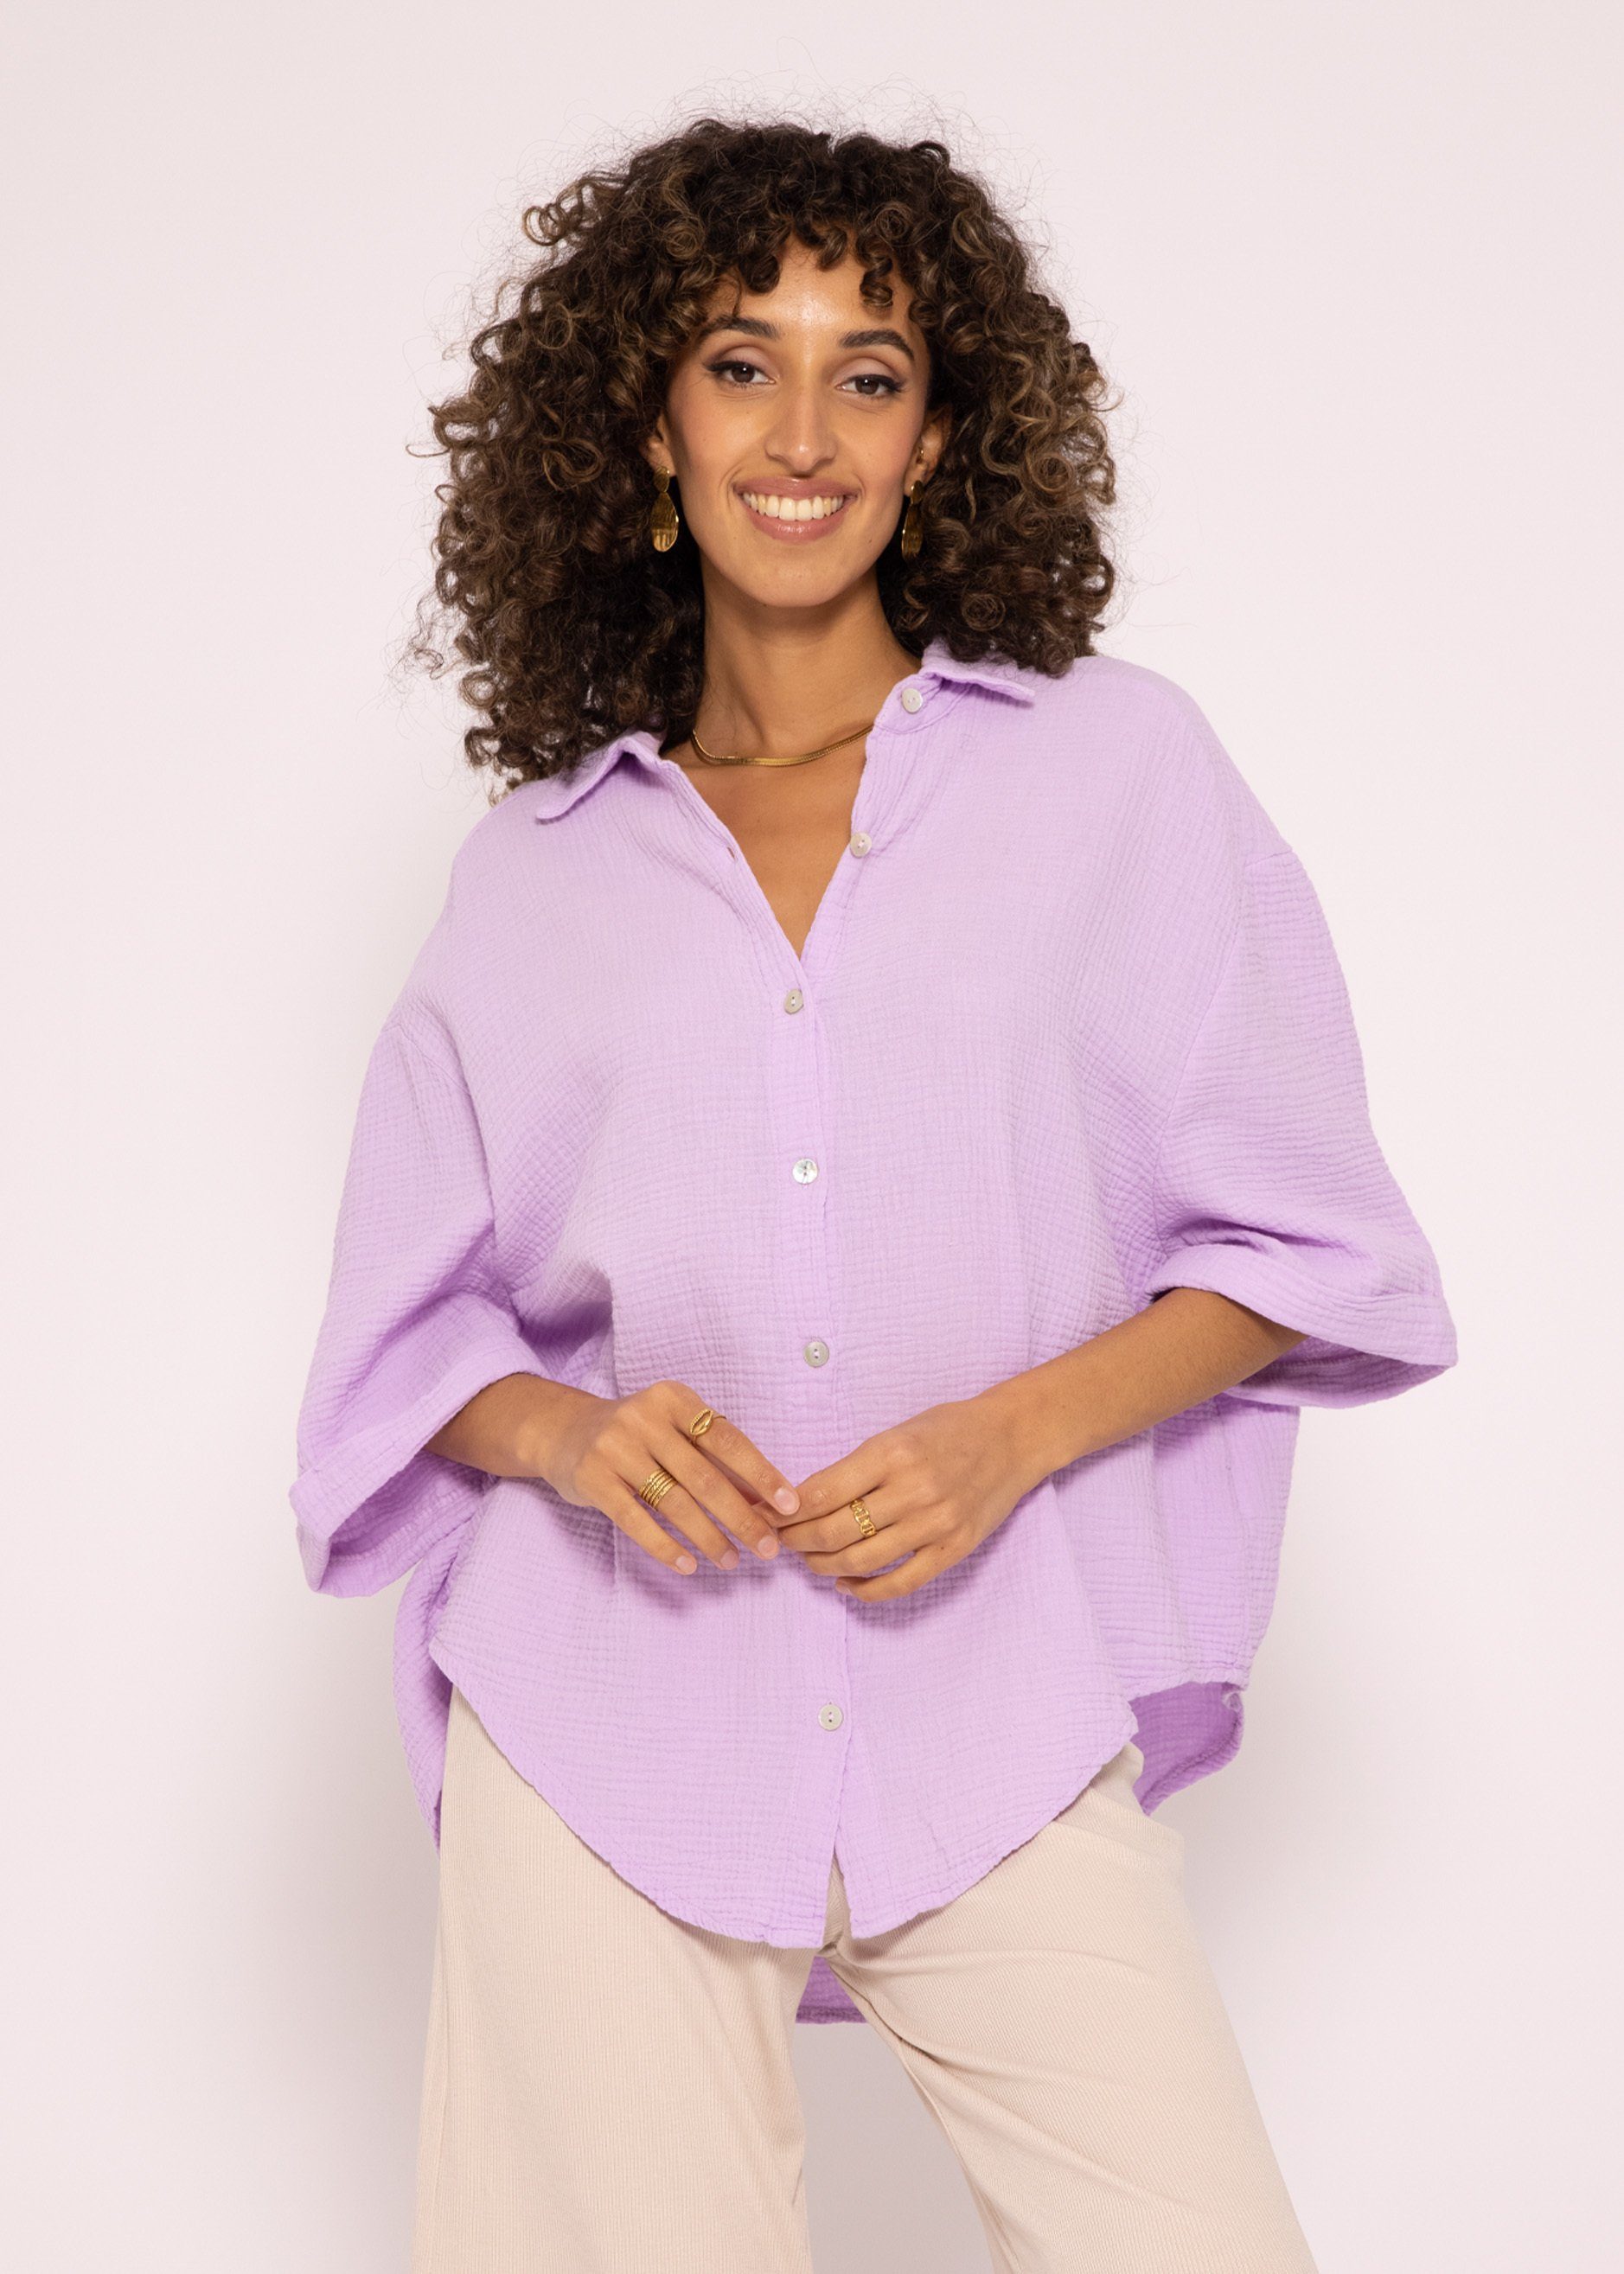 SASSYCLASSY Kurzarmbluse Oversize Musselin Bluse Damen kurzarm Shirt Bluse aus Musselin Baumwolle, Made in Italy, One Size: Gr. 36-48 Flieder